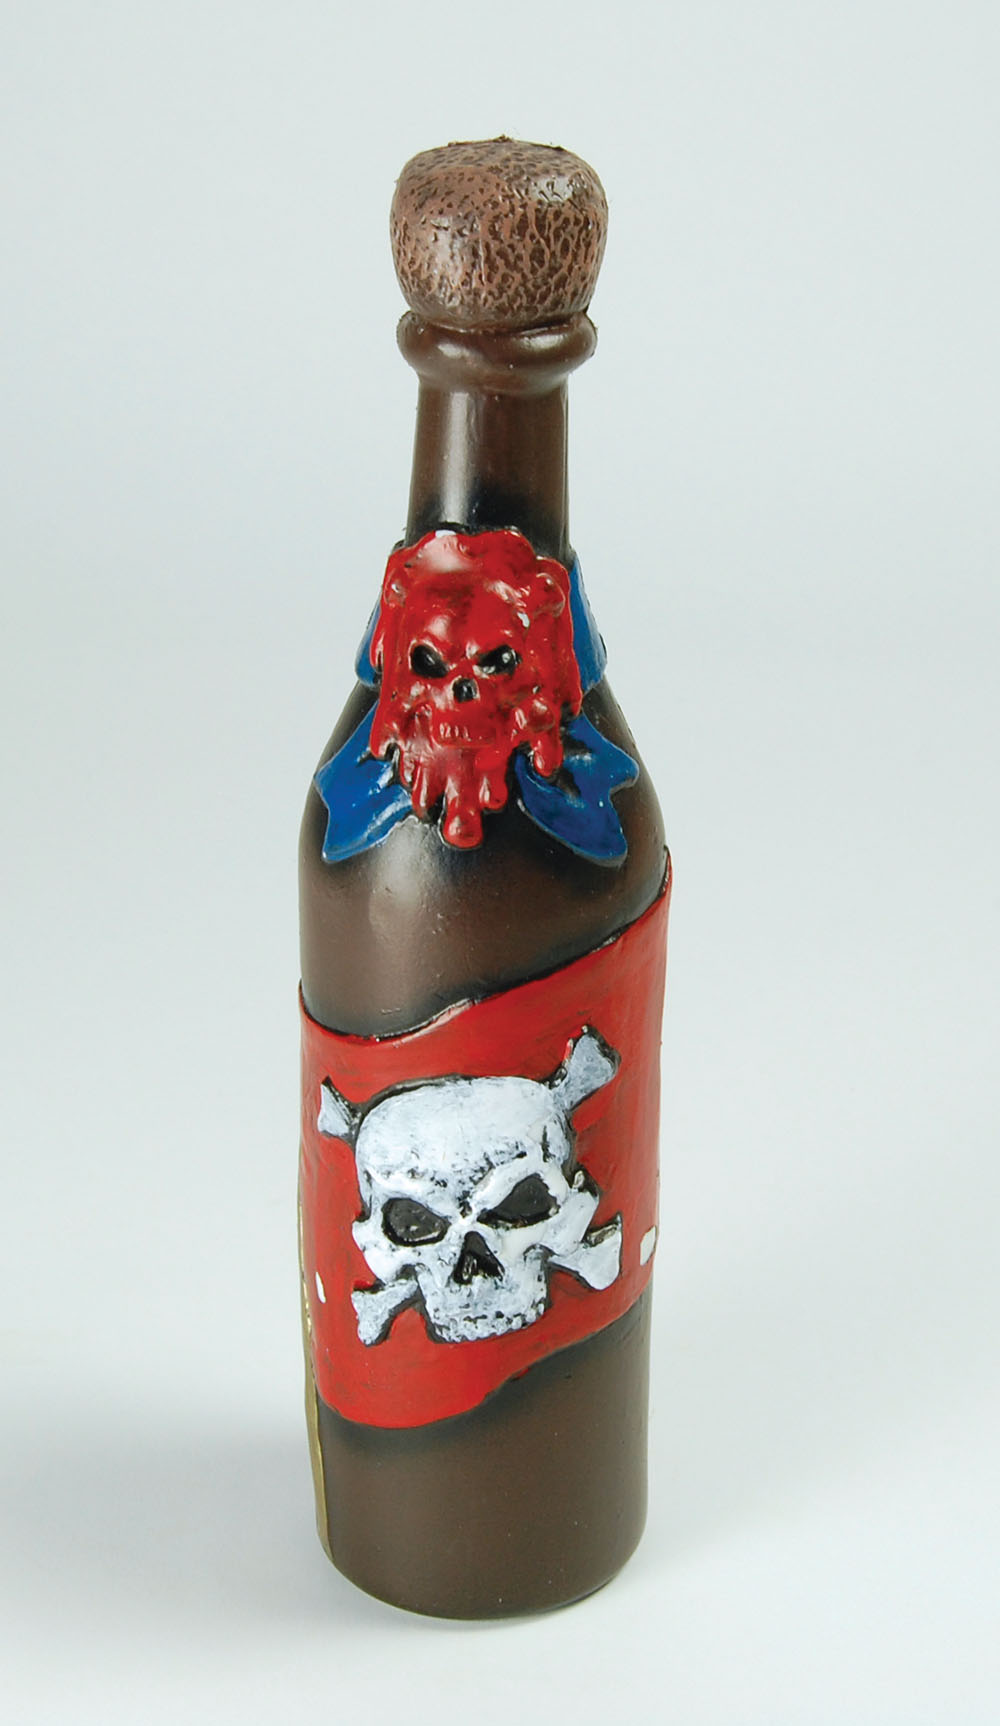 Pirate Bottle